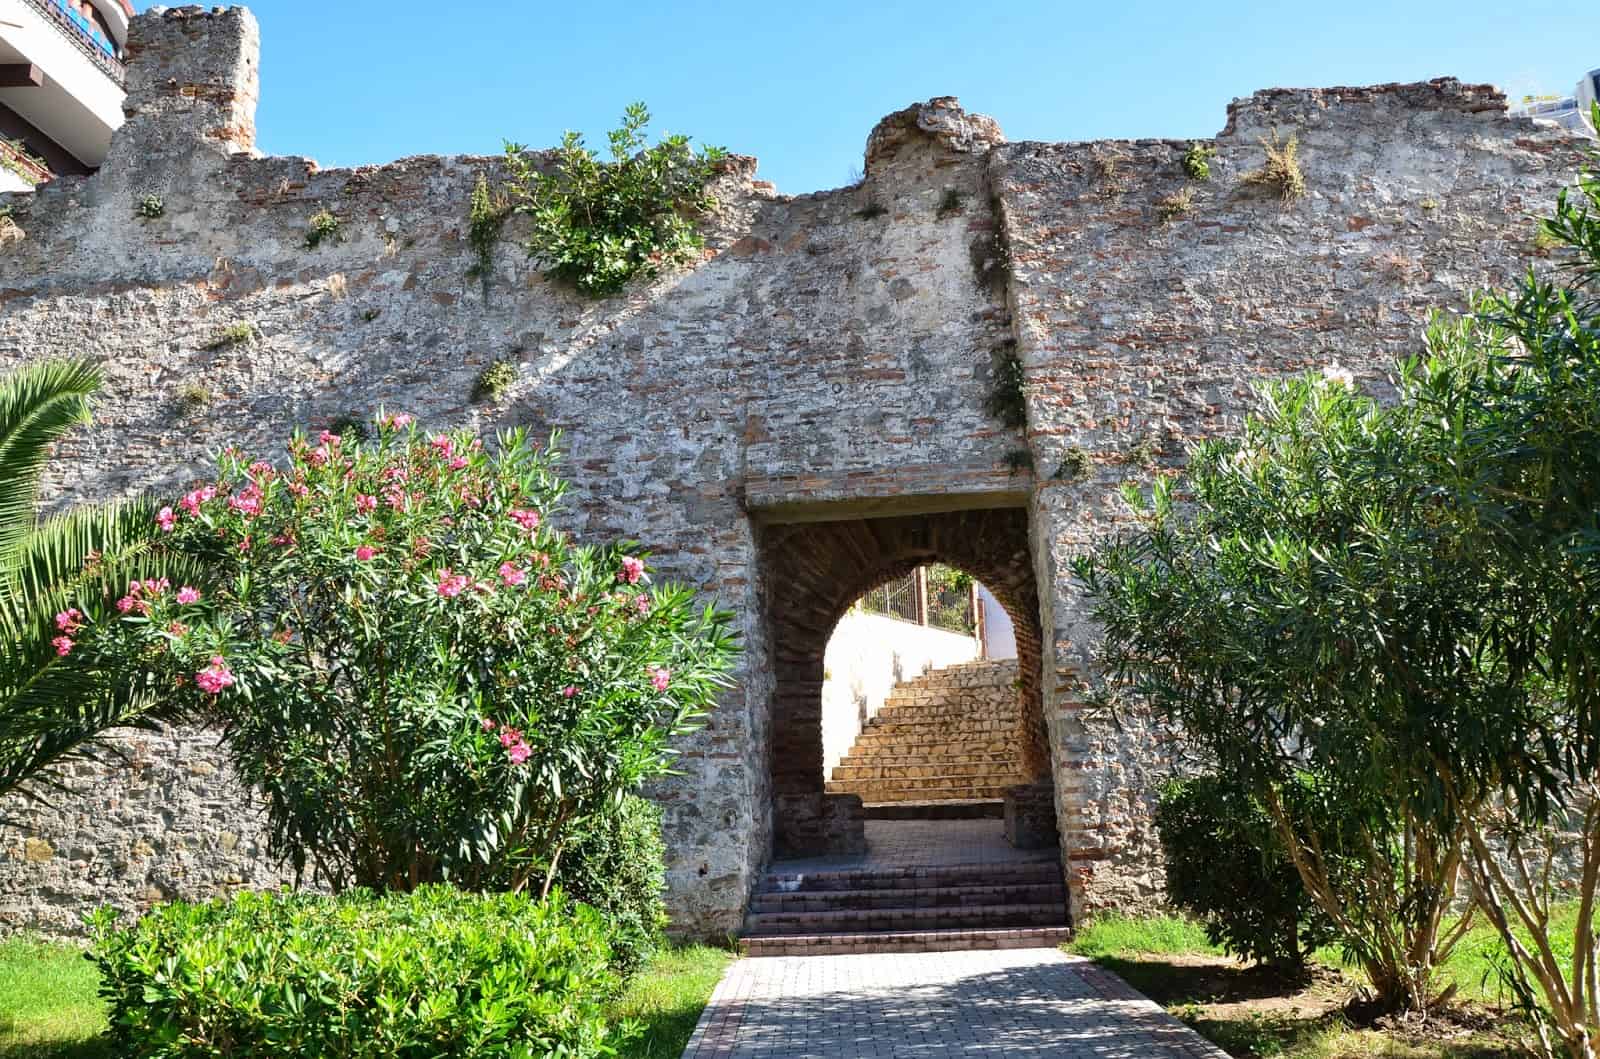 Byzantine walls in Durrës, Albania